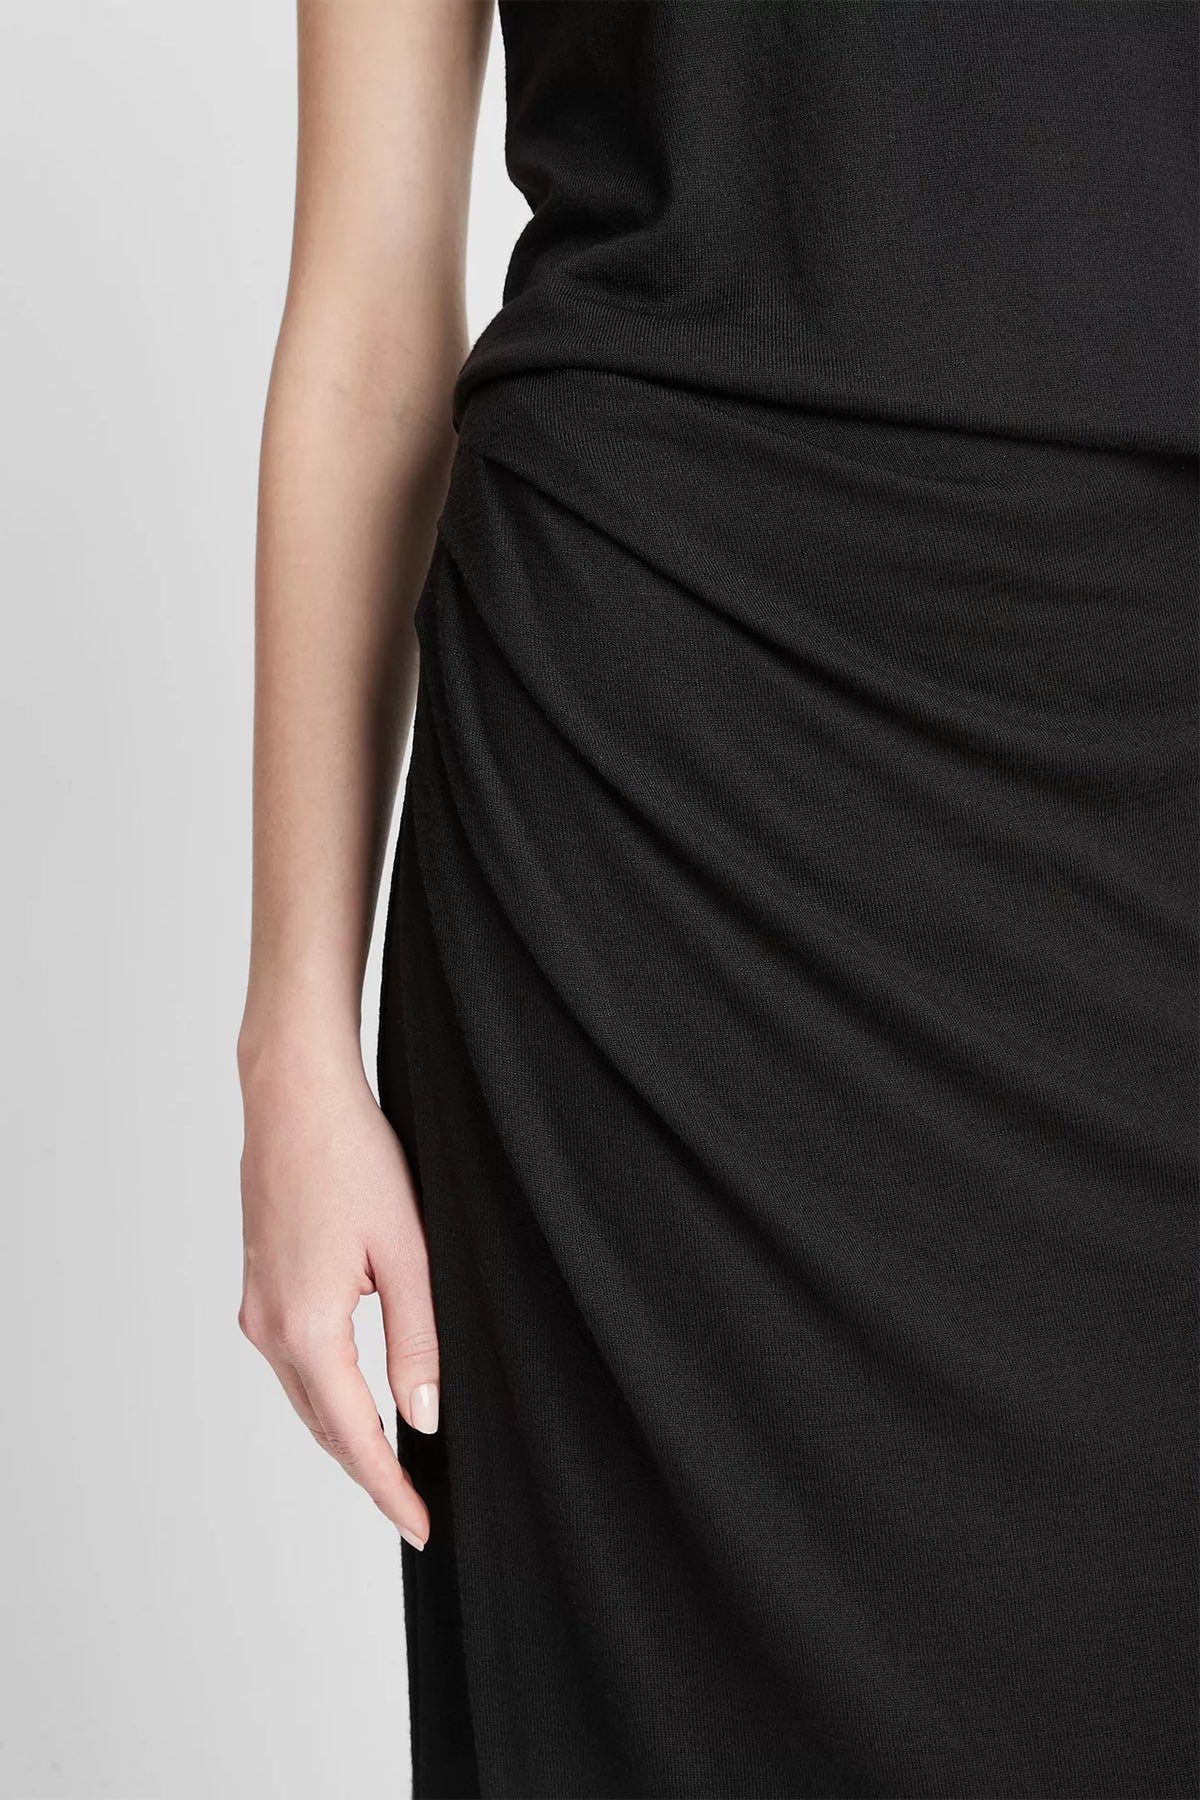 Side-Drape Skirt in Black - shop-olivia.com